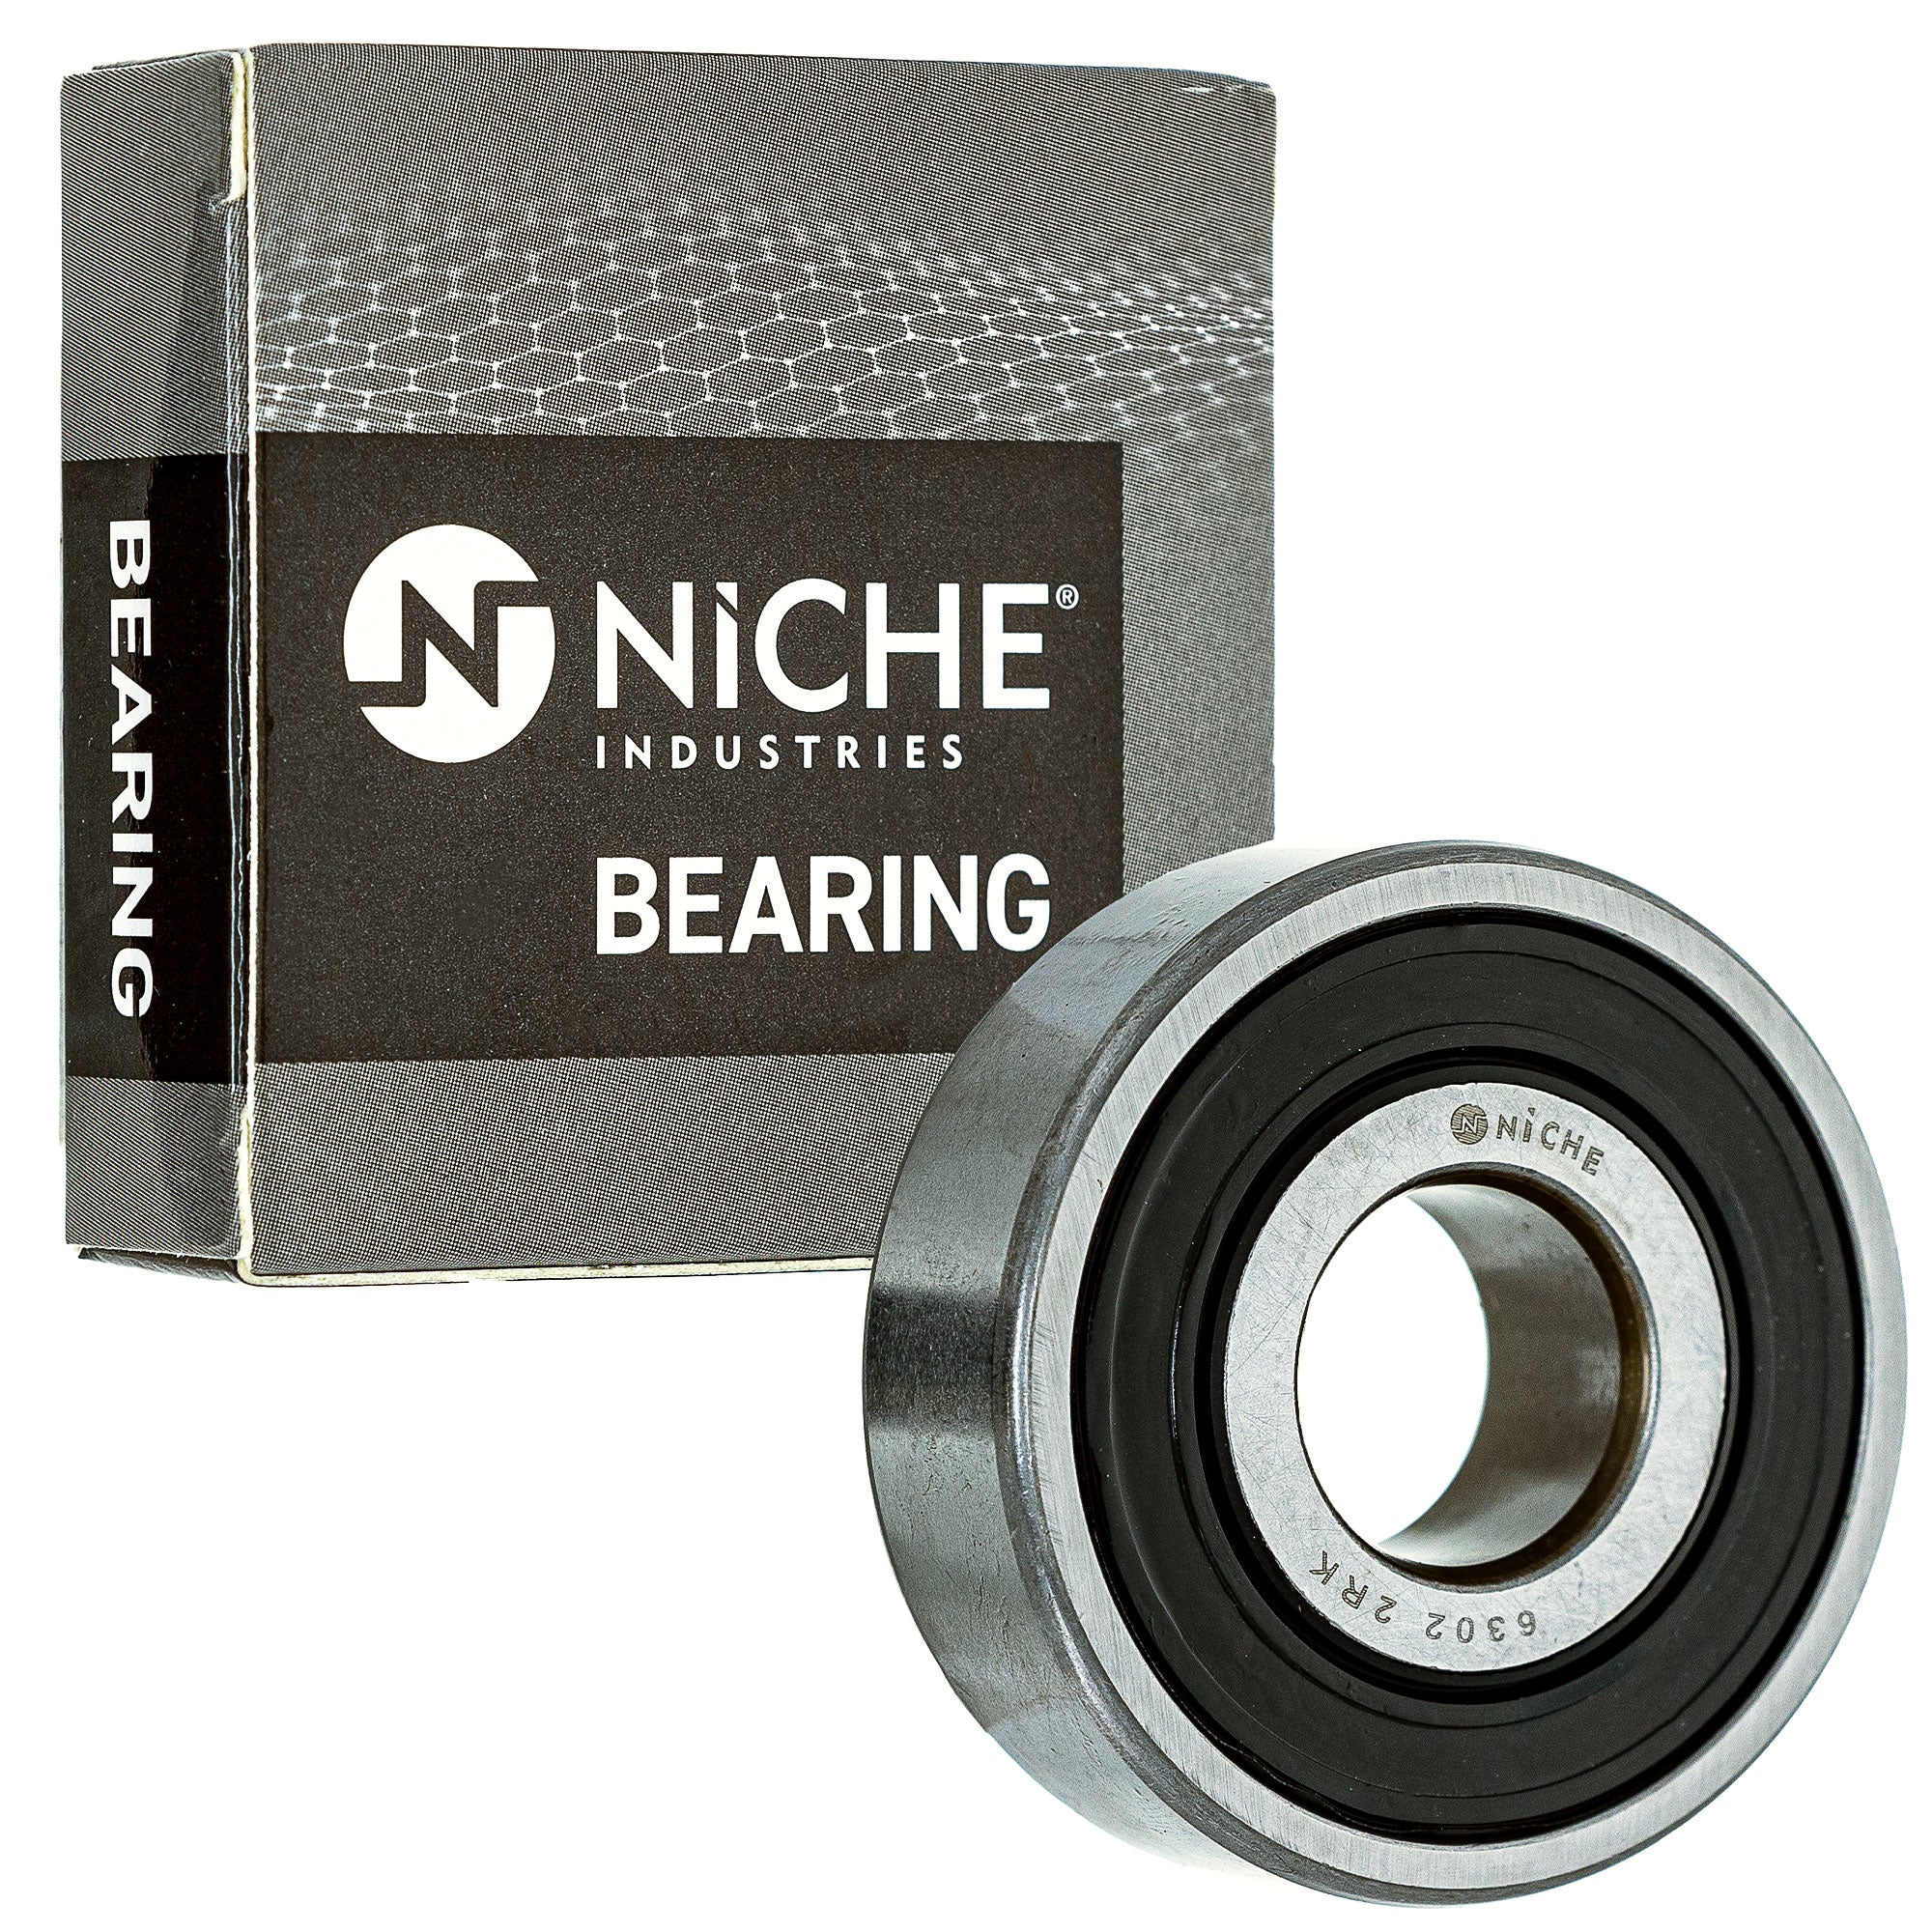 NICHE 519-CBB2327R Bearing 2-Pack for zOTHER XR200R XR200 XR185 XL350